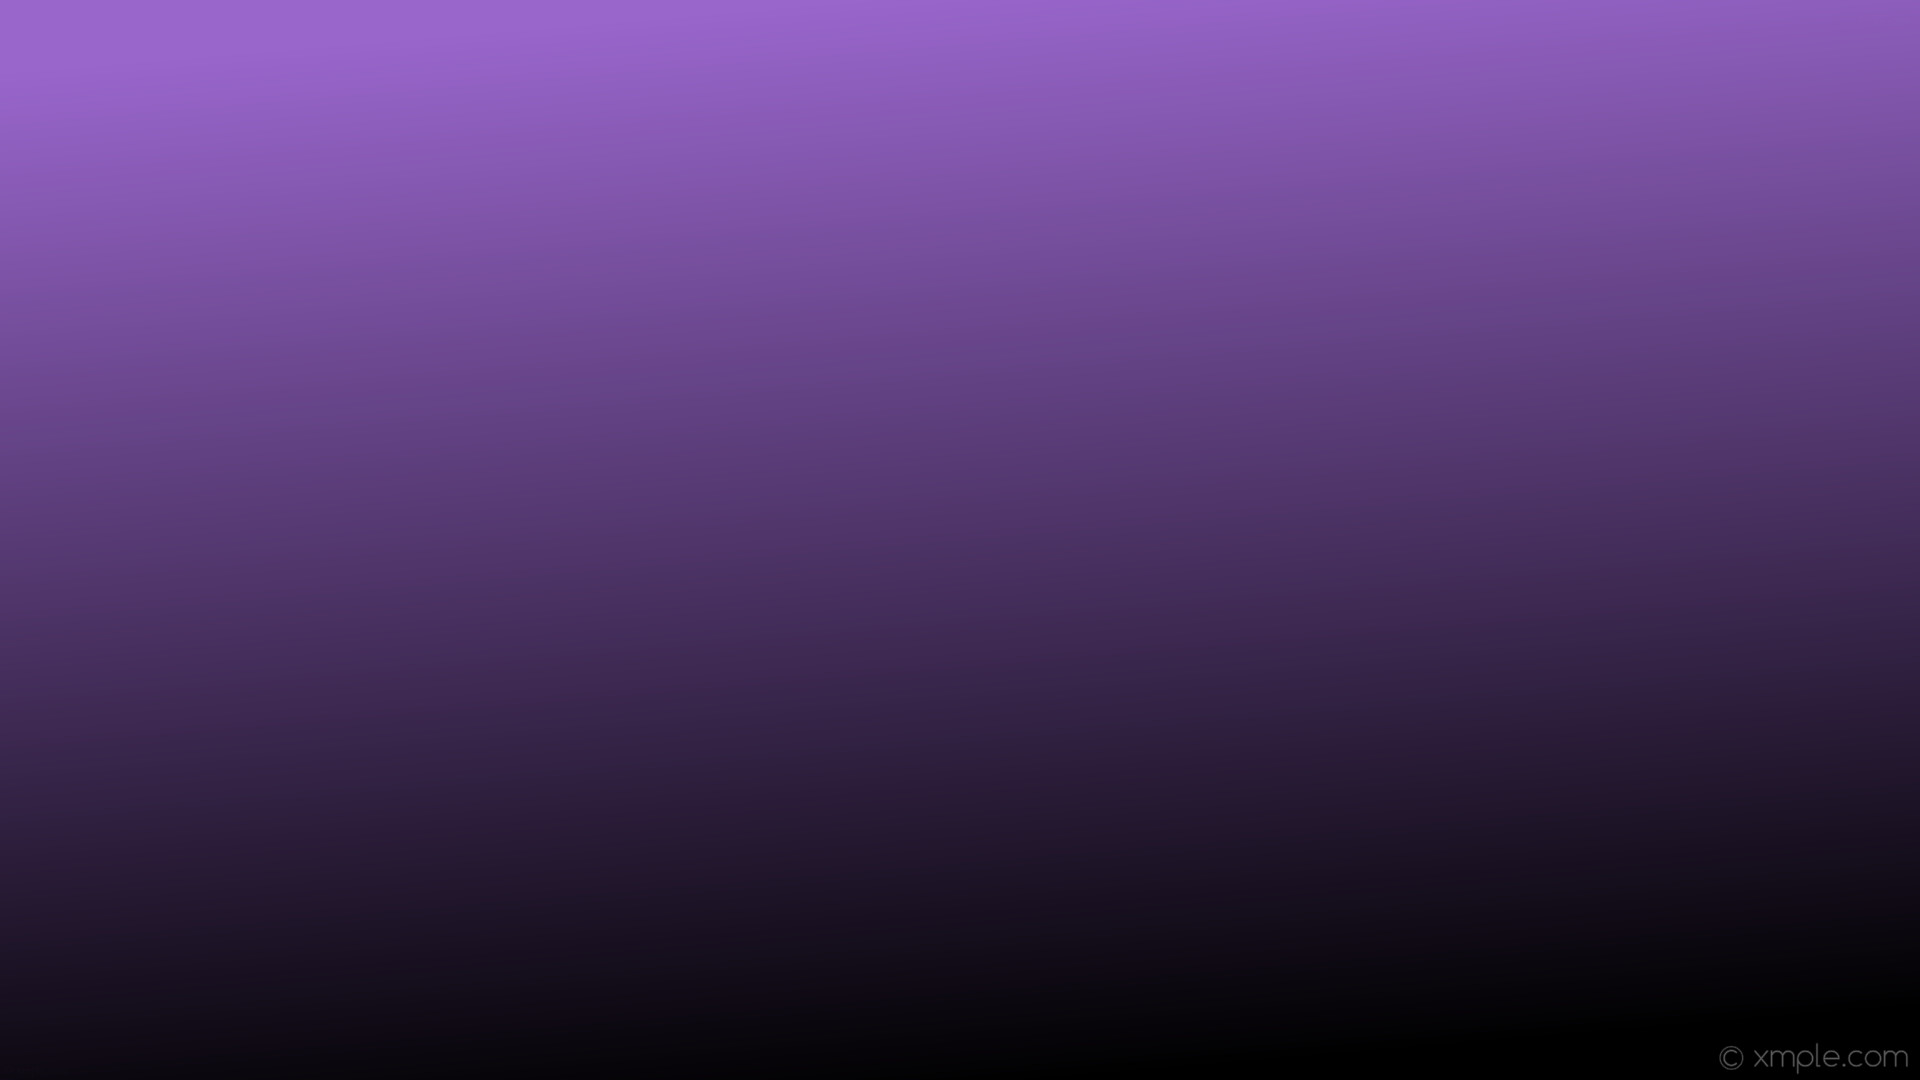 1920x1080 wallpaper black purple gradient linear amethyst #000000 #9966cc 285Â°